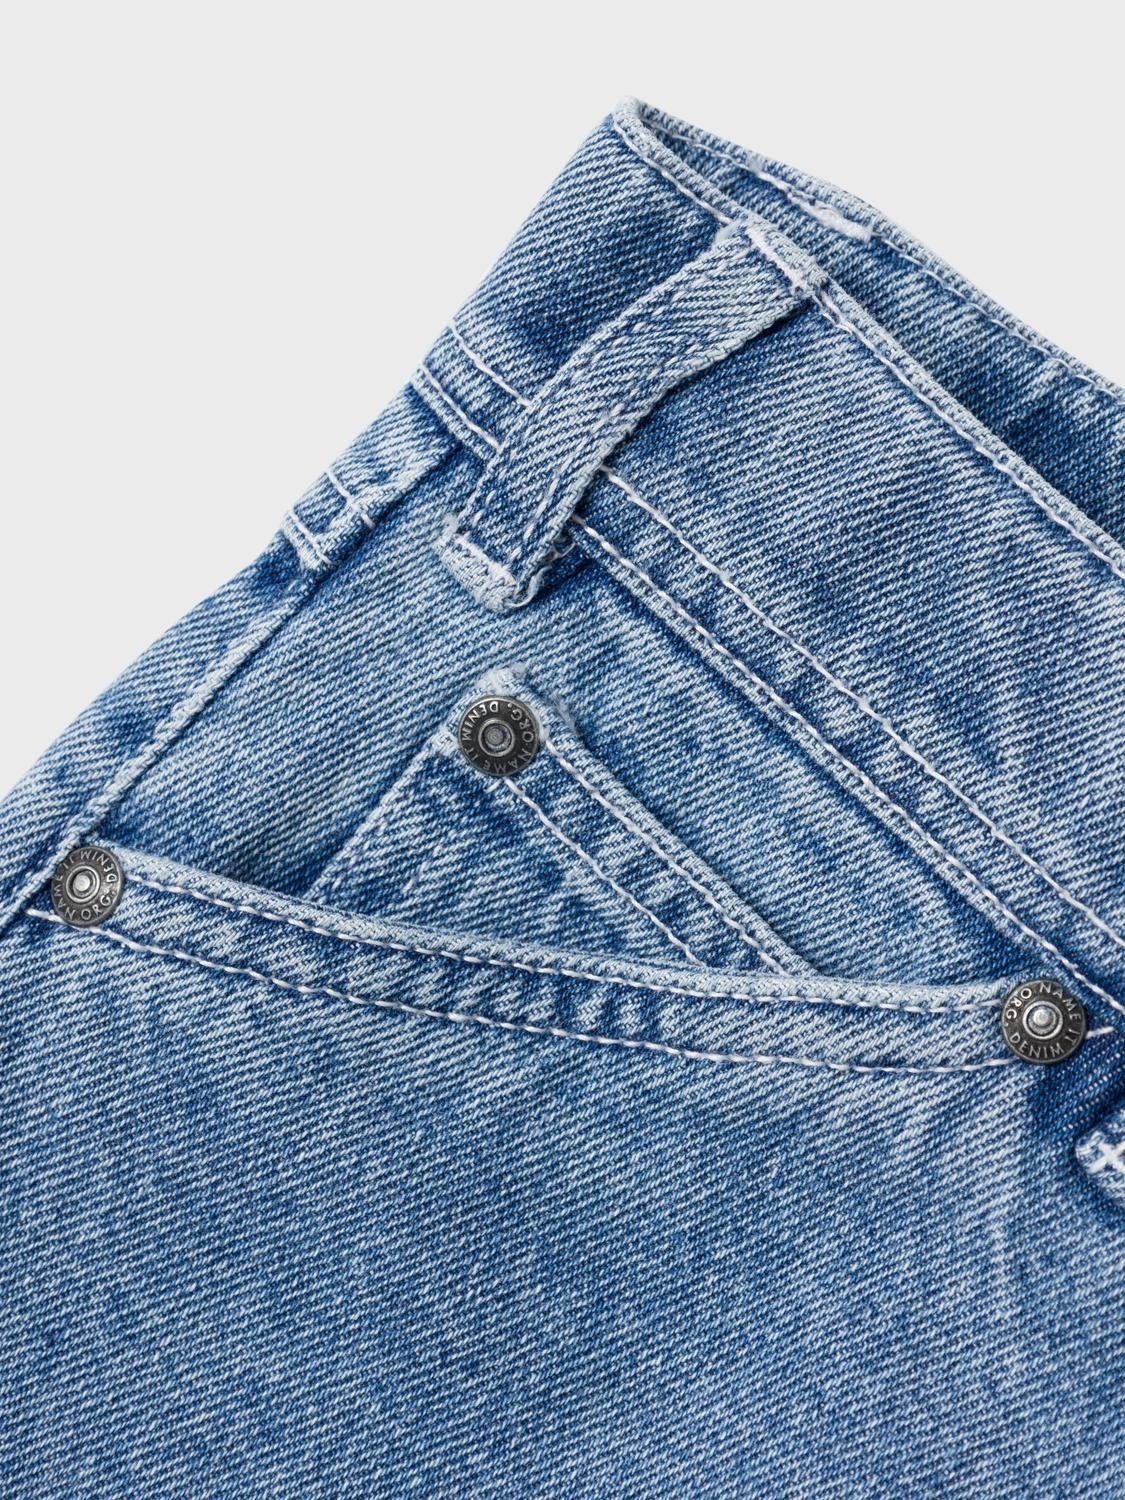 Name It 5-pocket jeans